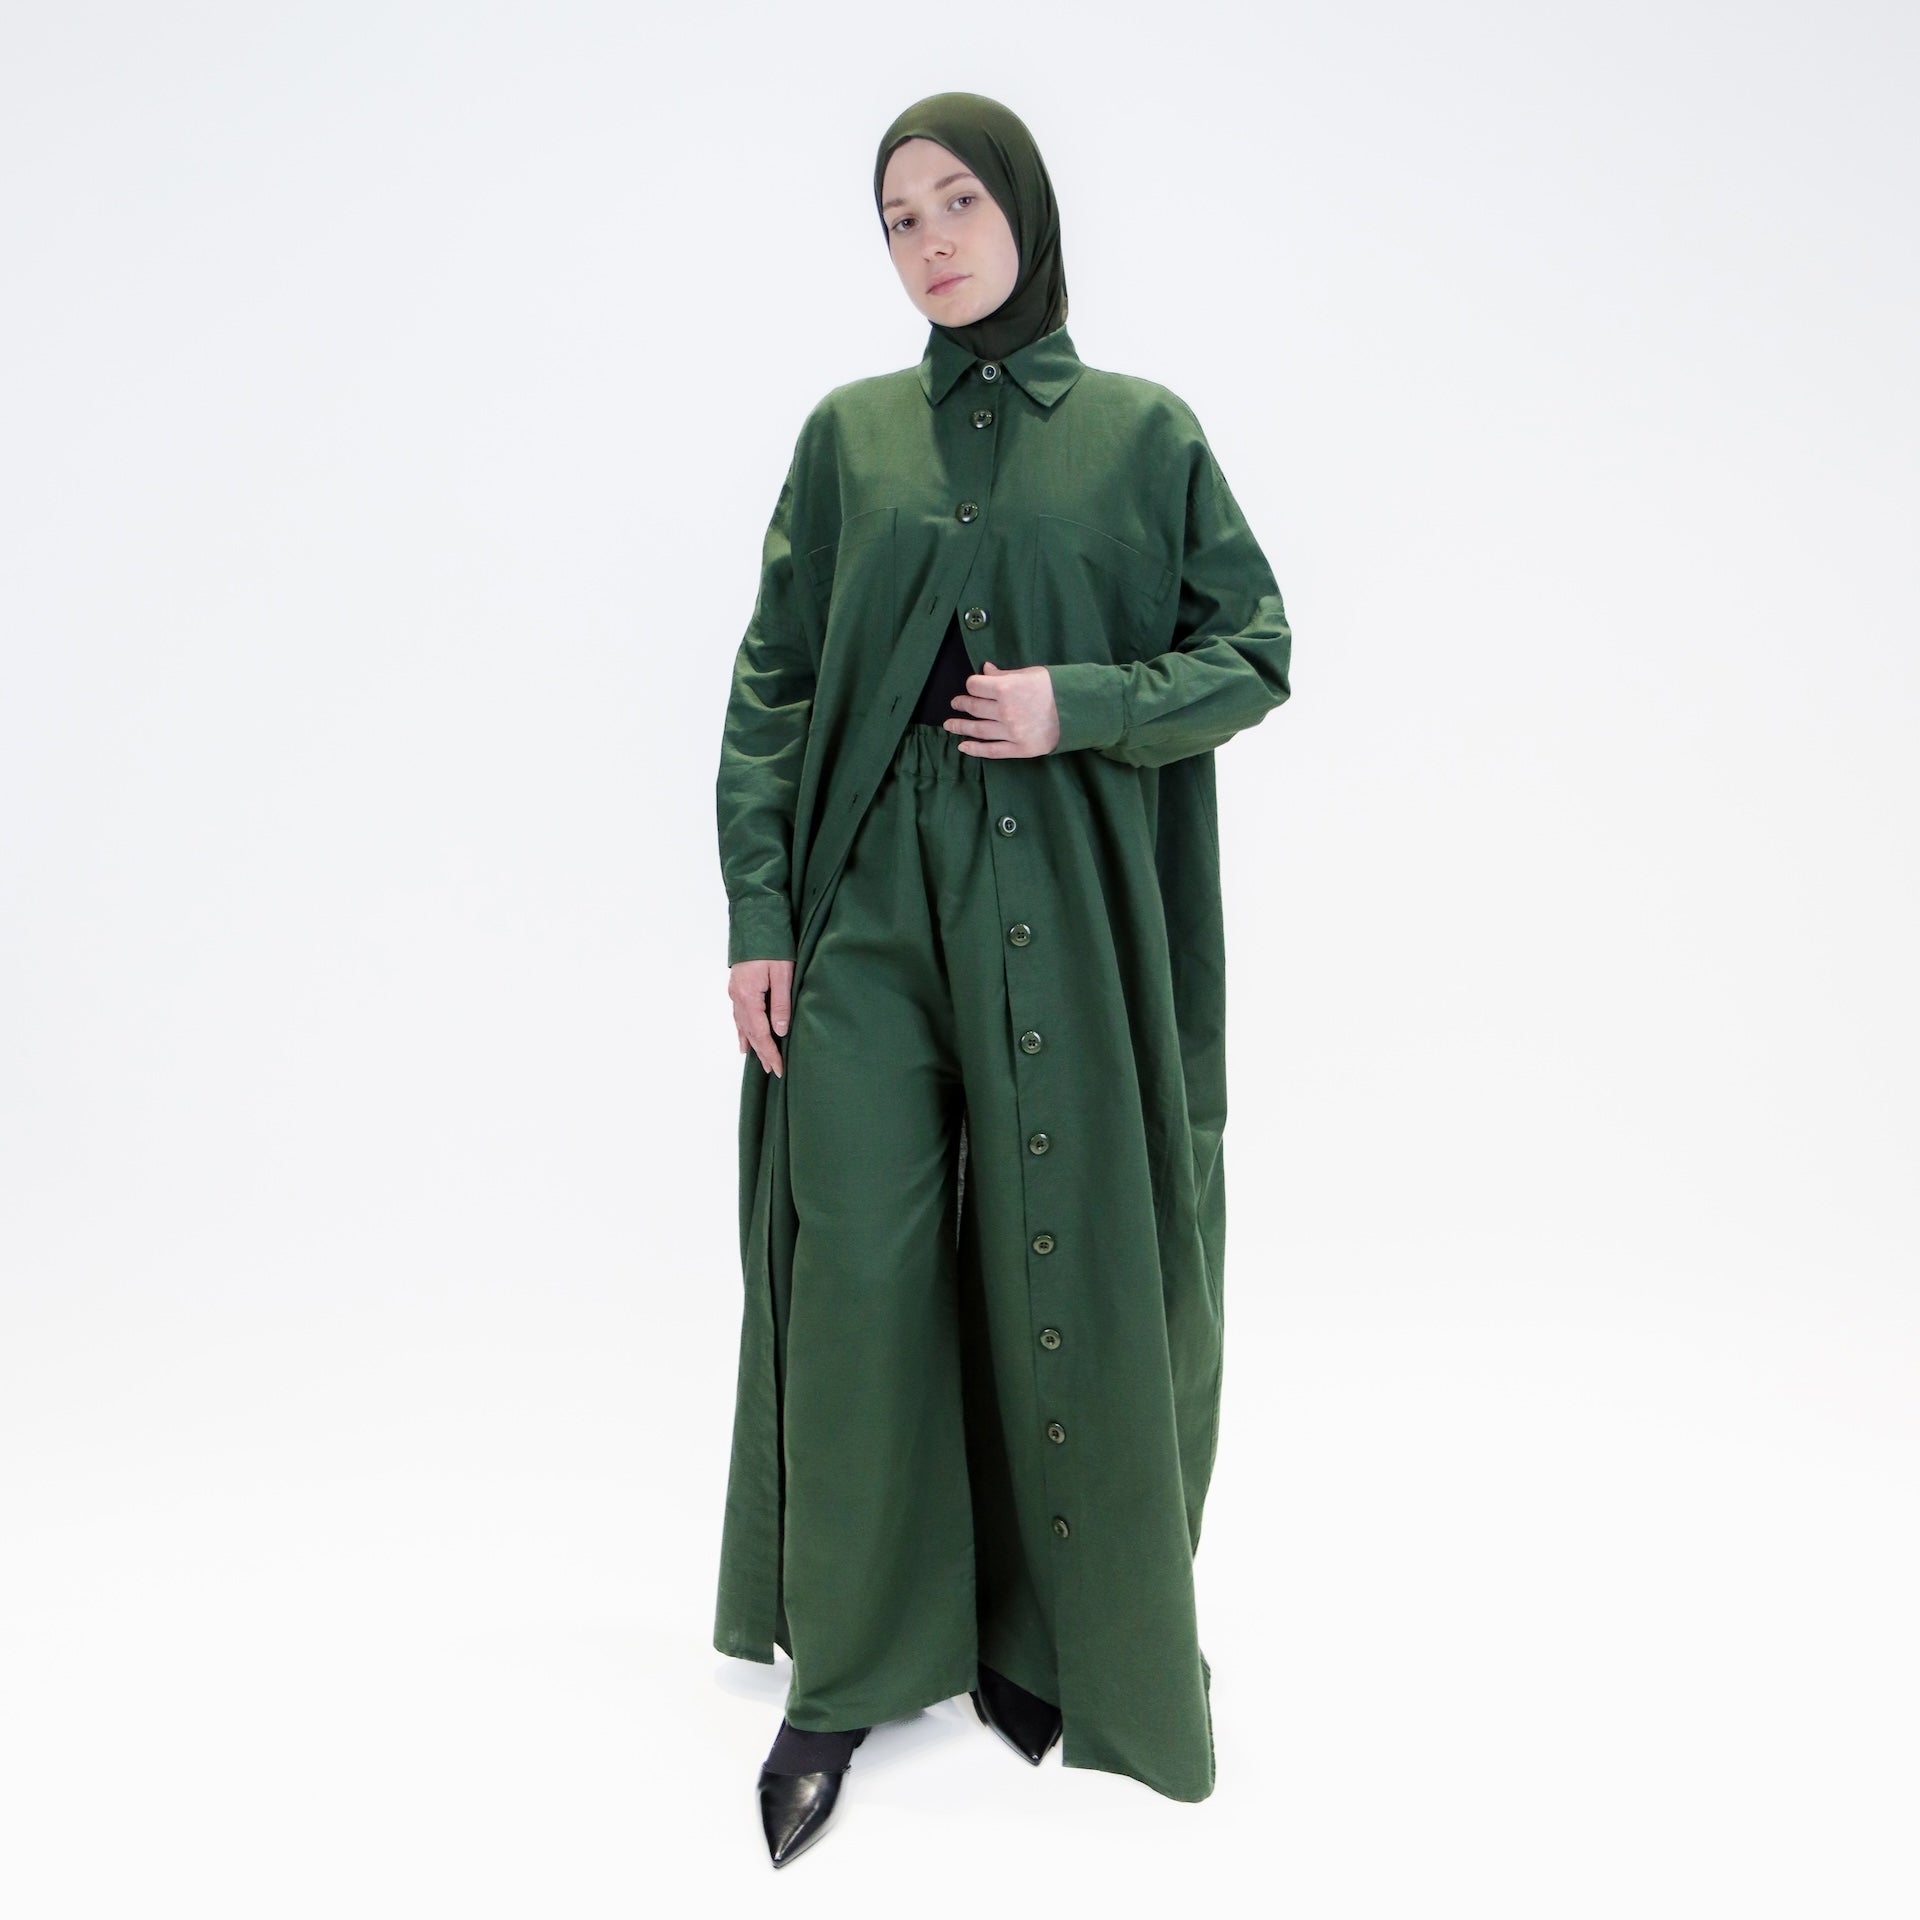 Abaya dress style maxi dress for women with wide trousers "Khaki Linen" 4